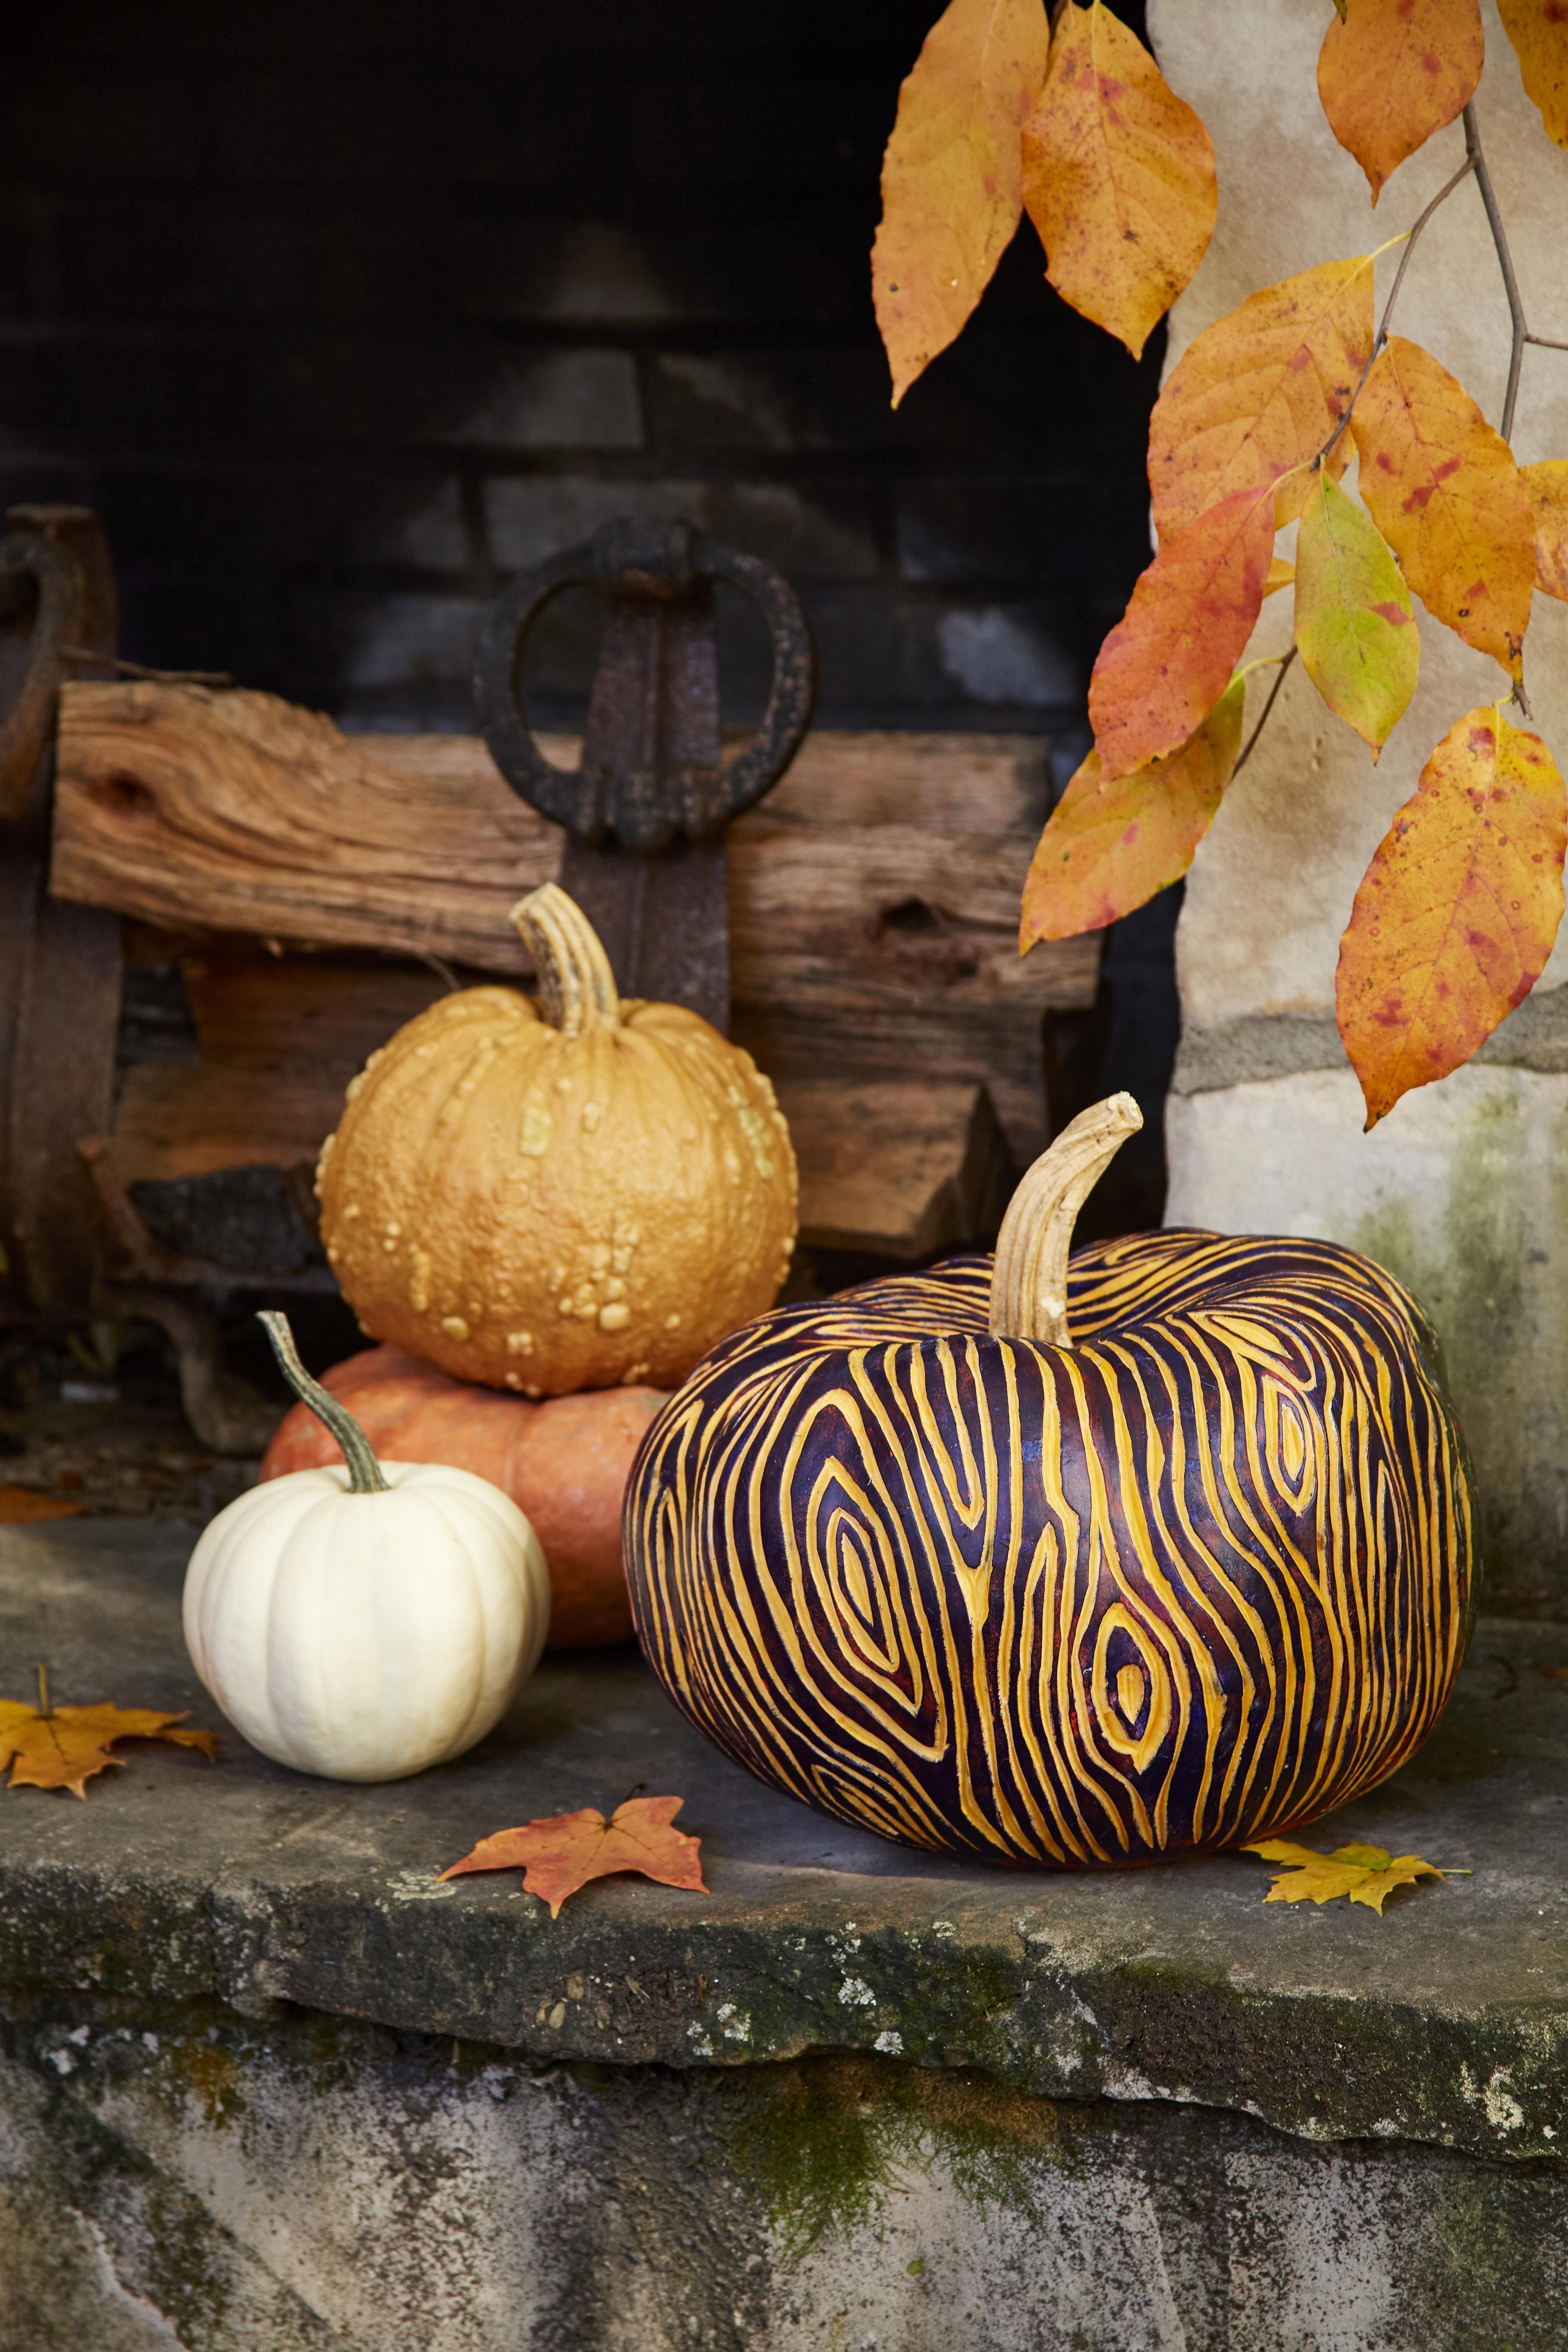 cool pumpkin carving patterns